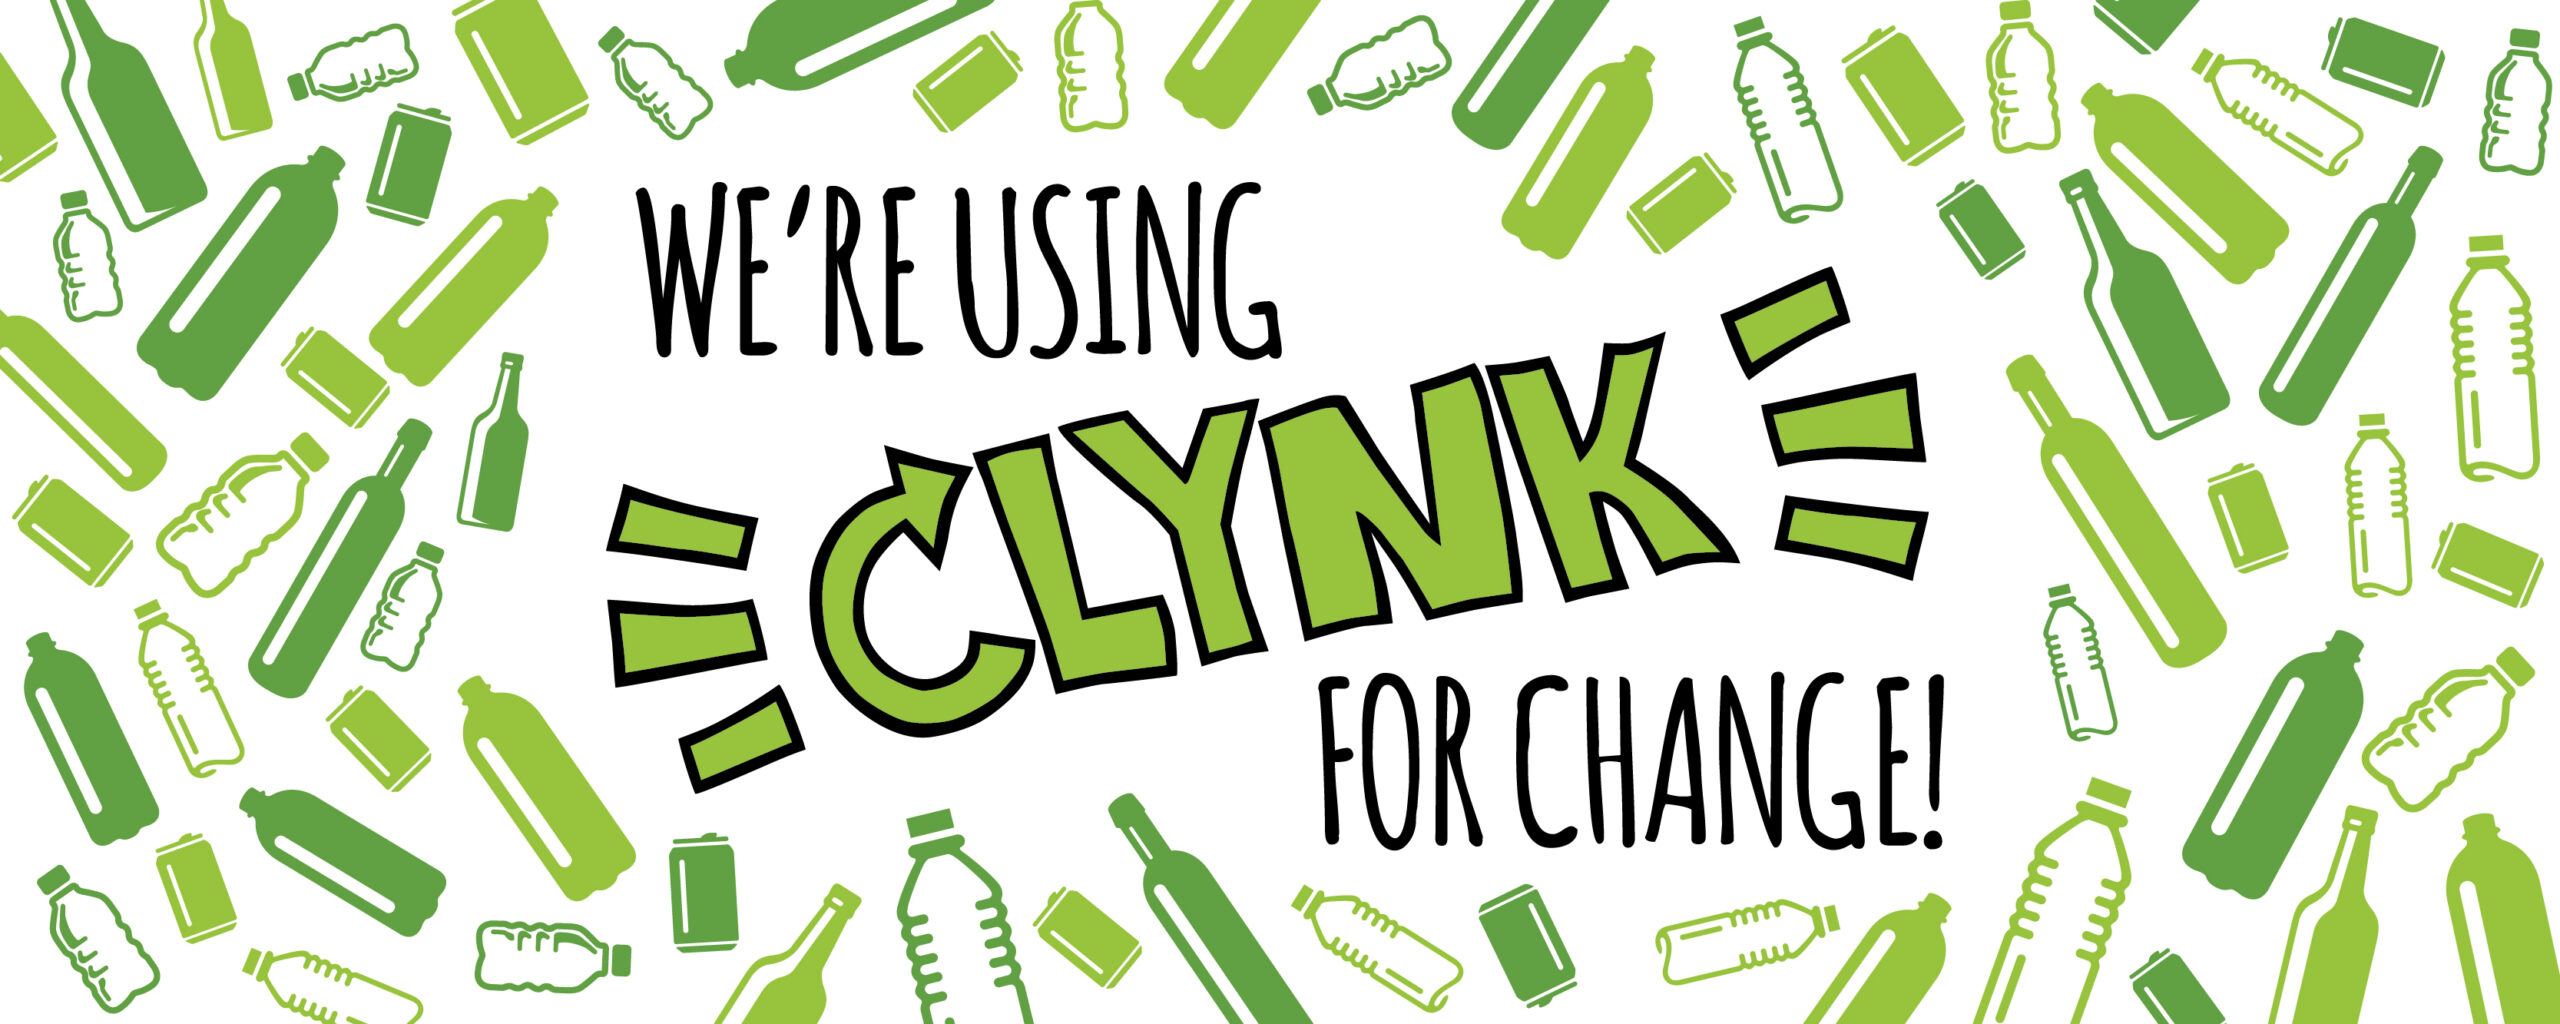 Hannaford's CLYNK bottle return helps support CCSM.